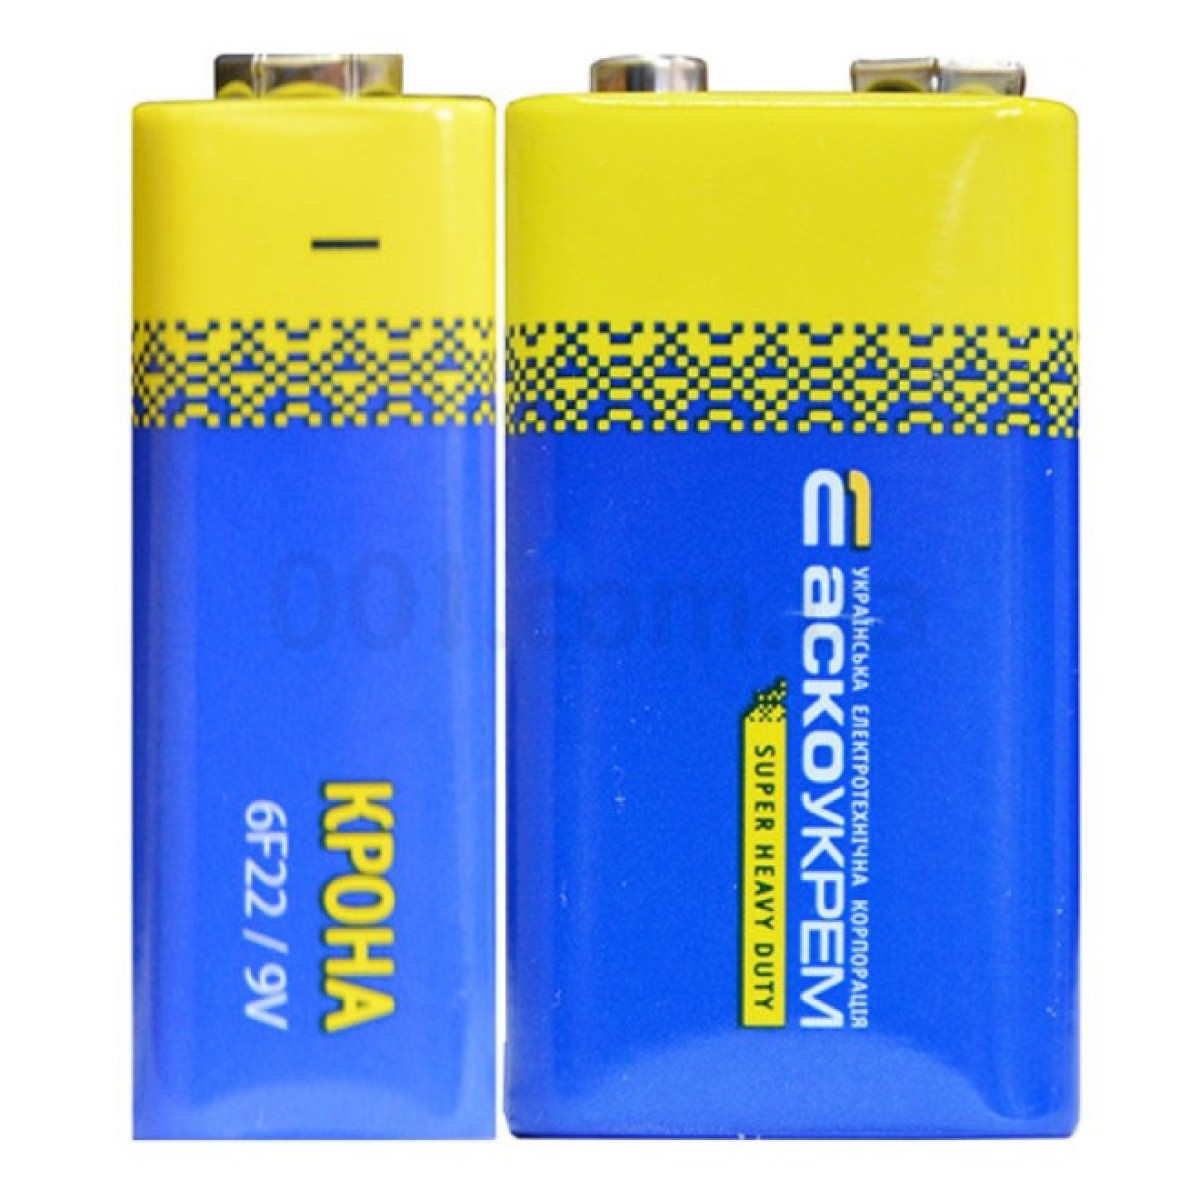 Батарейка сольова Крона.6F22.SP1, типорозмір «Крона» упаковка shrink 1 шт., АСКО-УКРЕМ 256_256.jpg